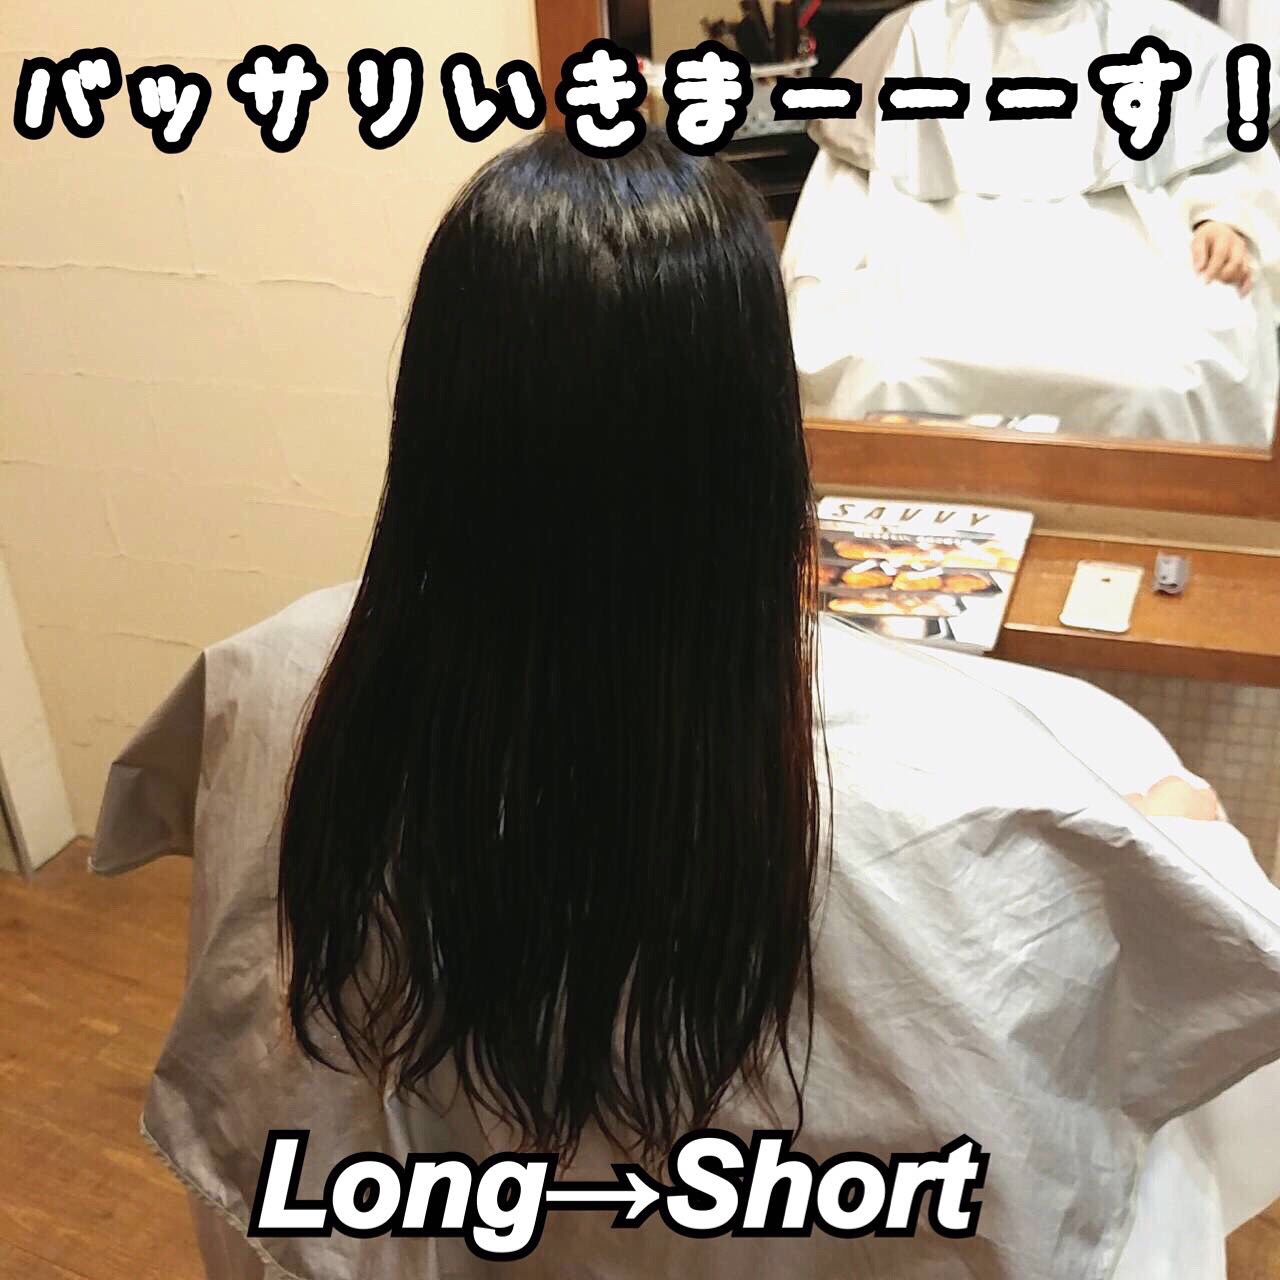 Long→Short (^O^)